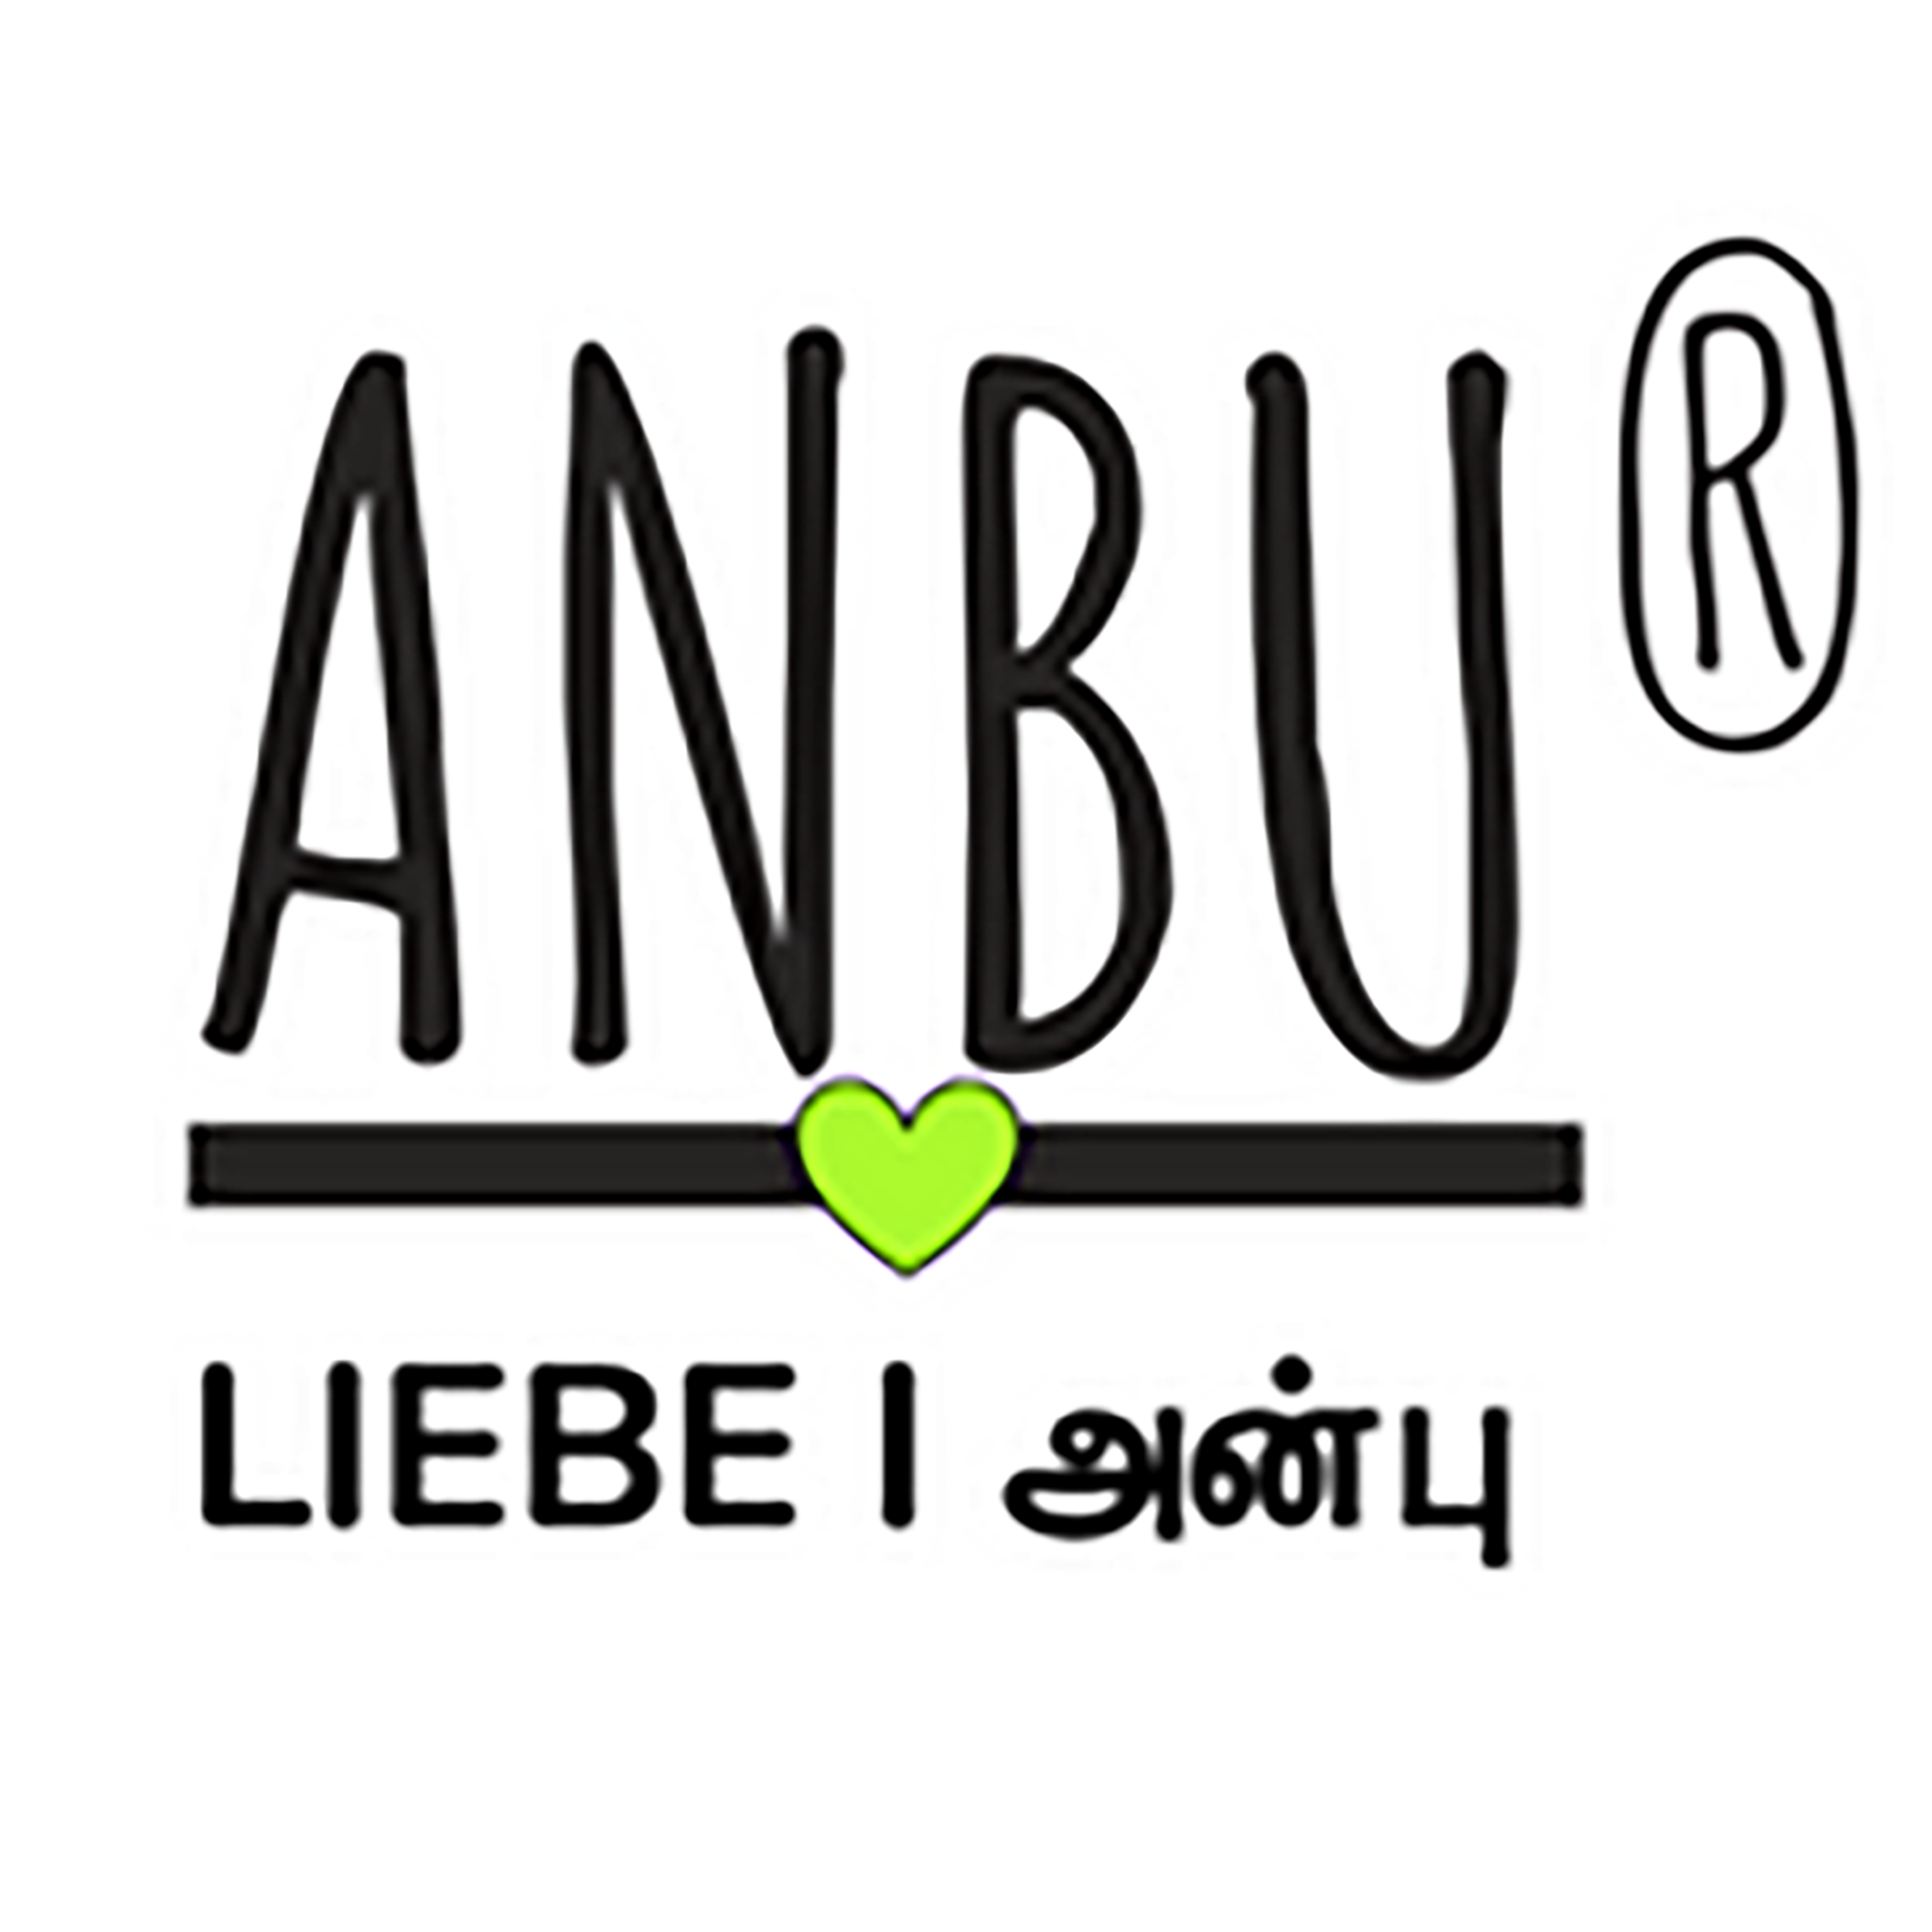 (c) Anbu-liebe.de